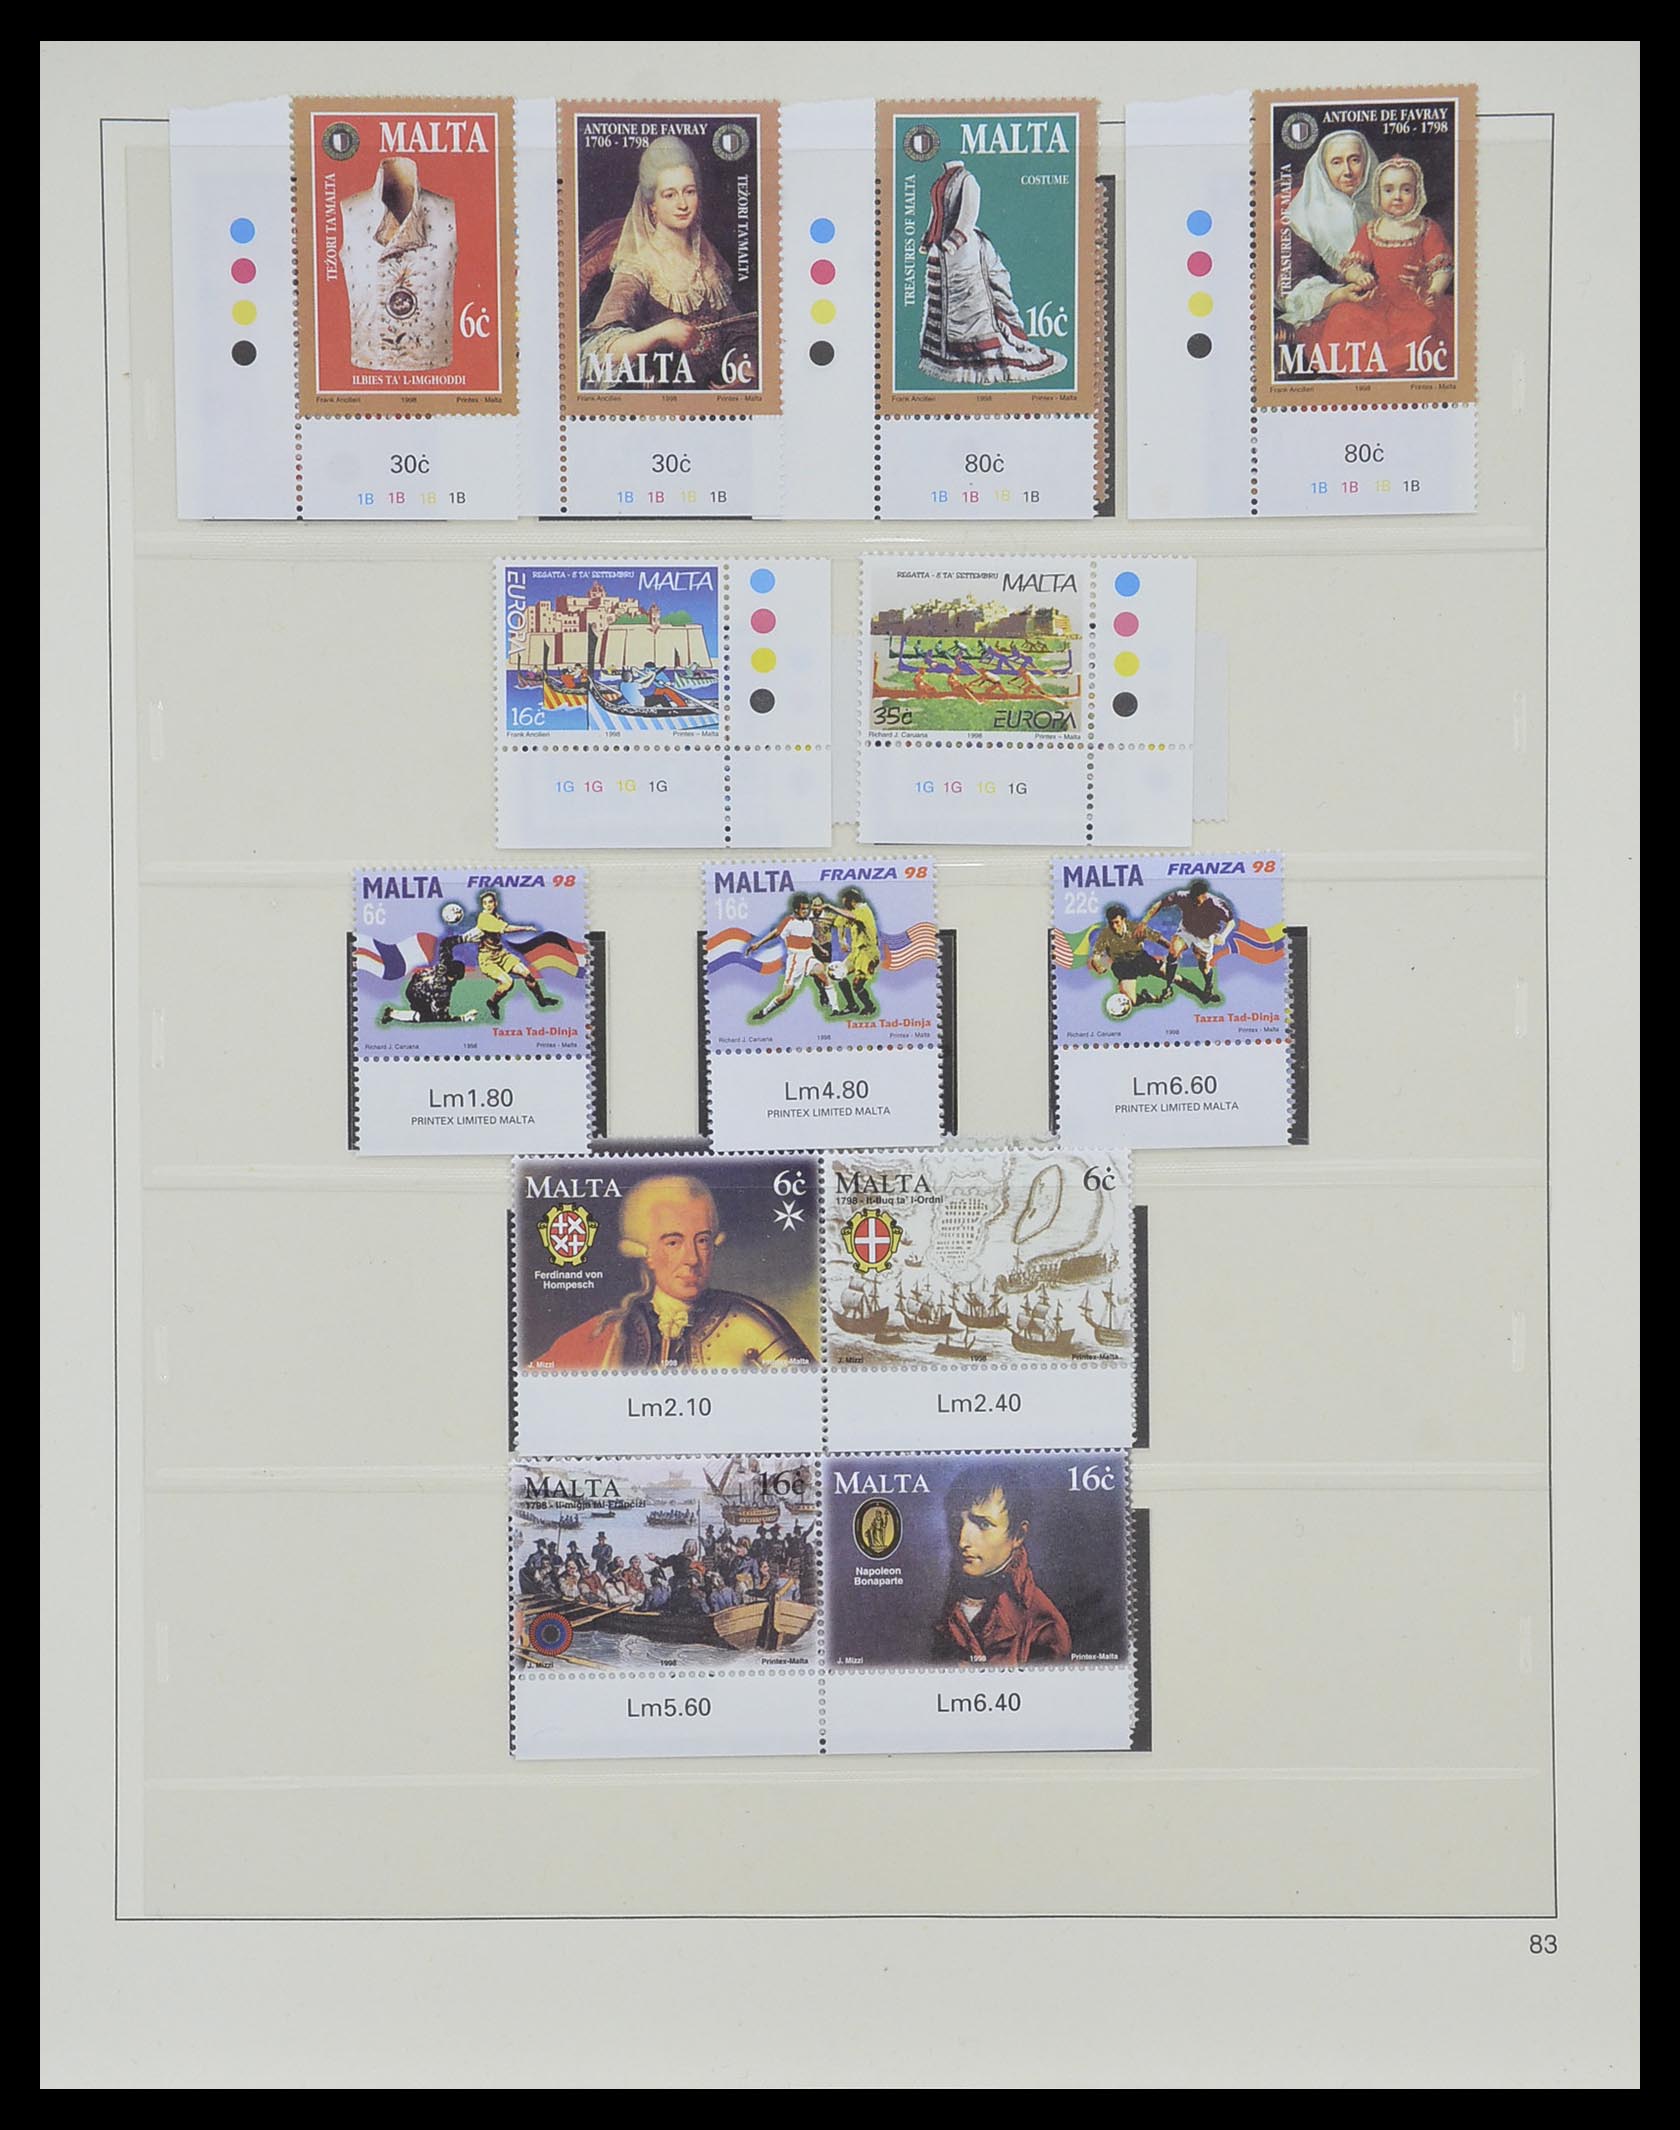 33968 183 - Stamp collection 33968 Malta 1861-2001.